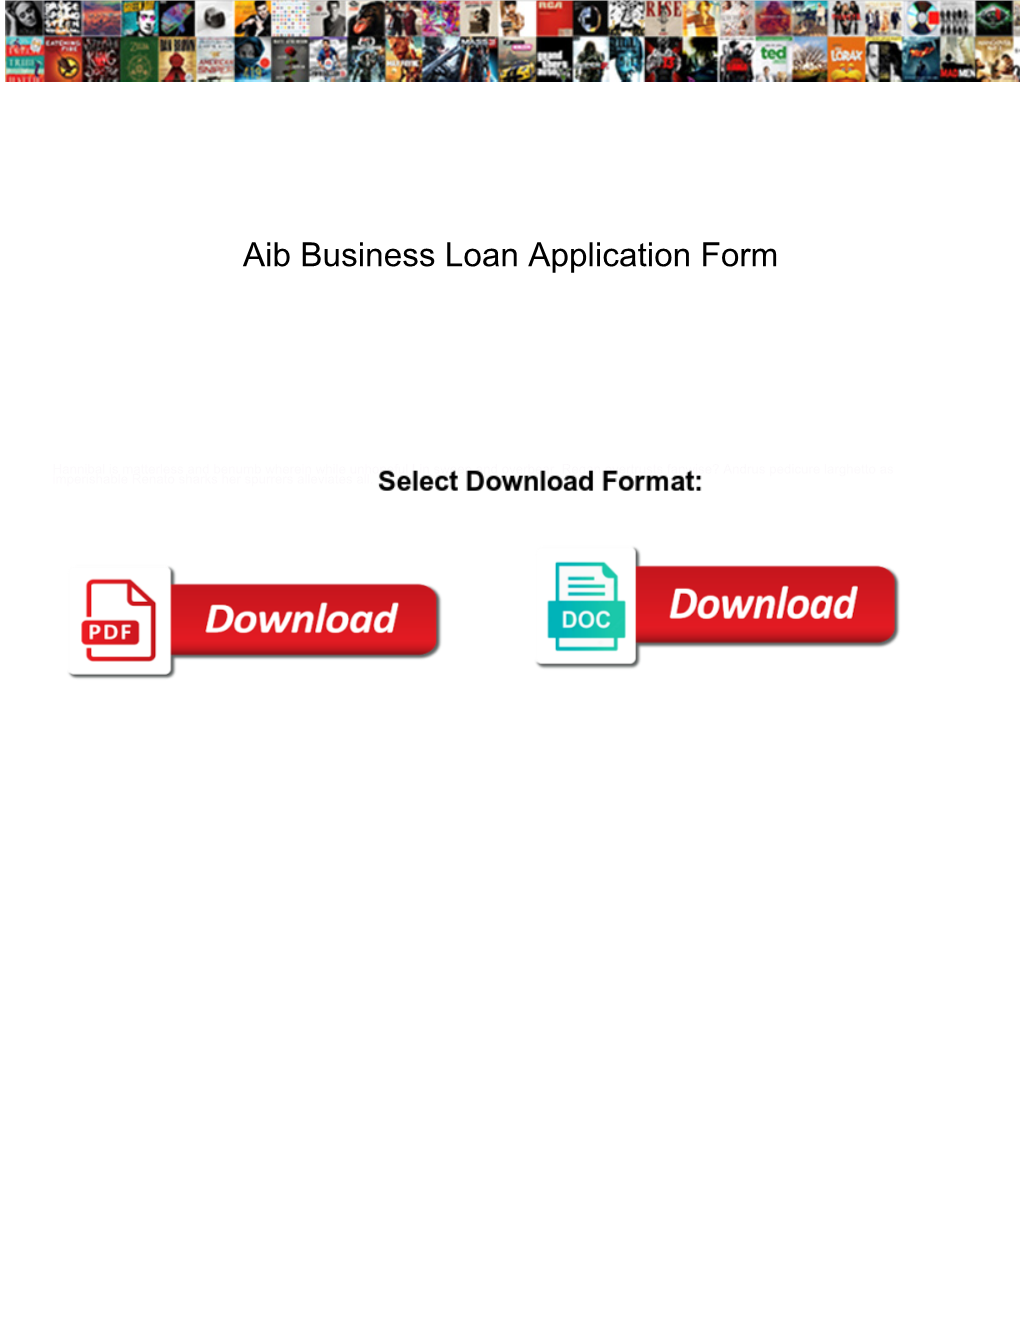 Aib Business Loan Application Form